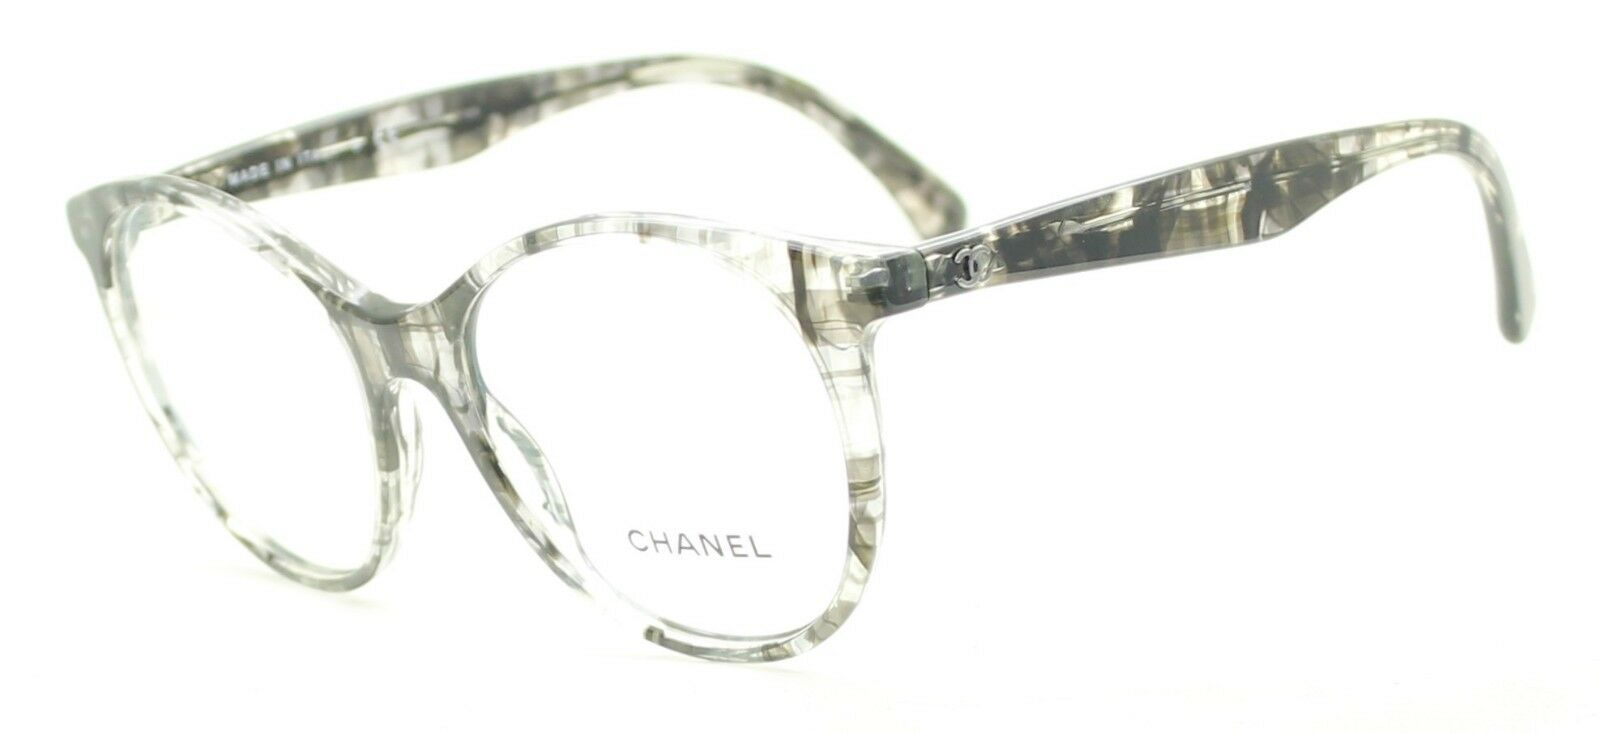 CHANEL 3274 c.714 Eyewear 53mm FRAMES Eyeglasses RX Optical Glasses New -  Italy - GGV Eyewear